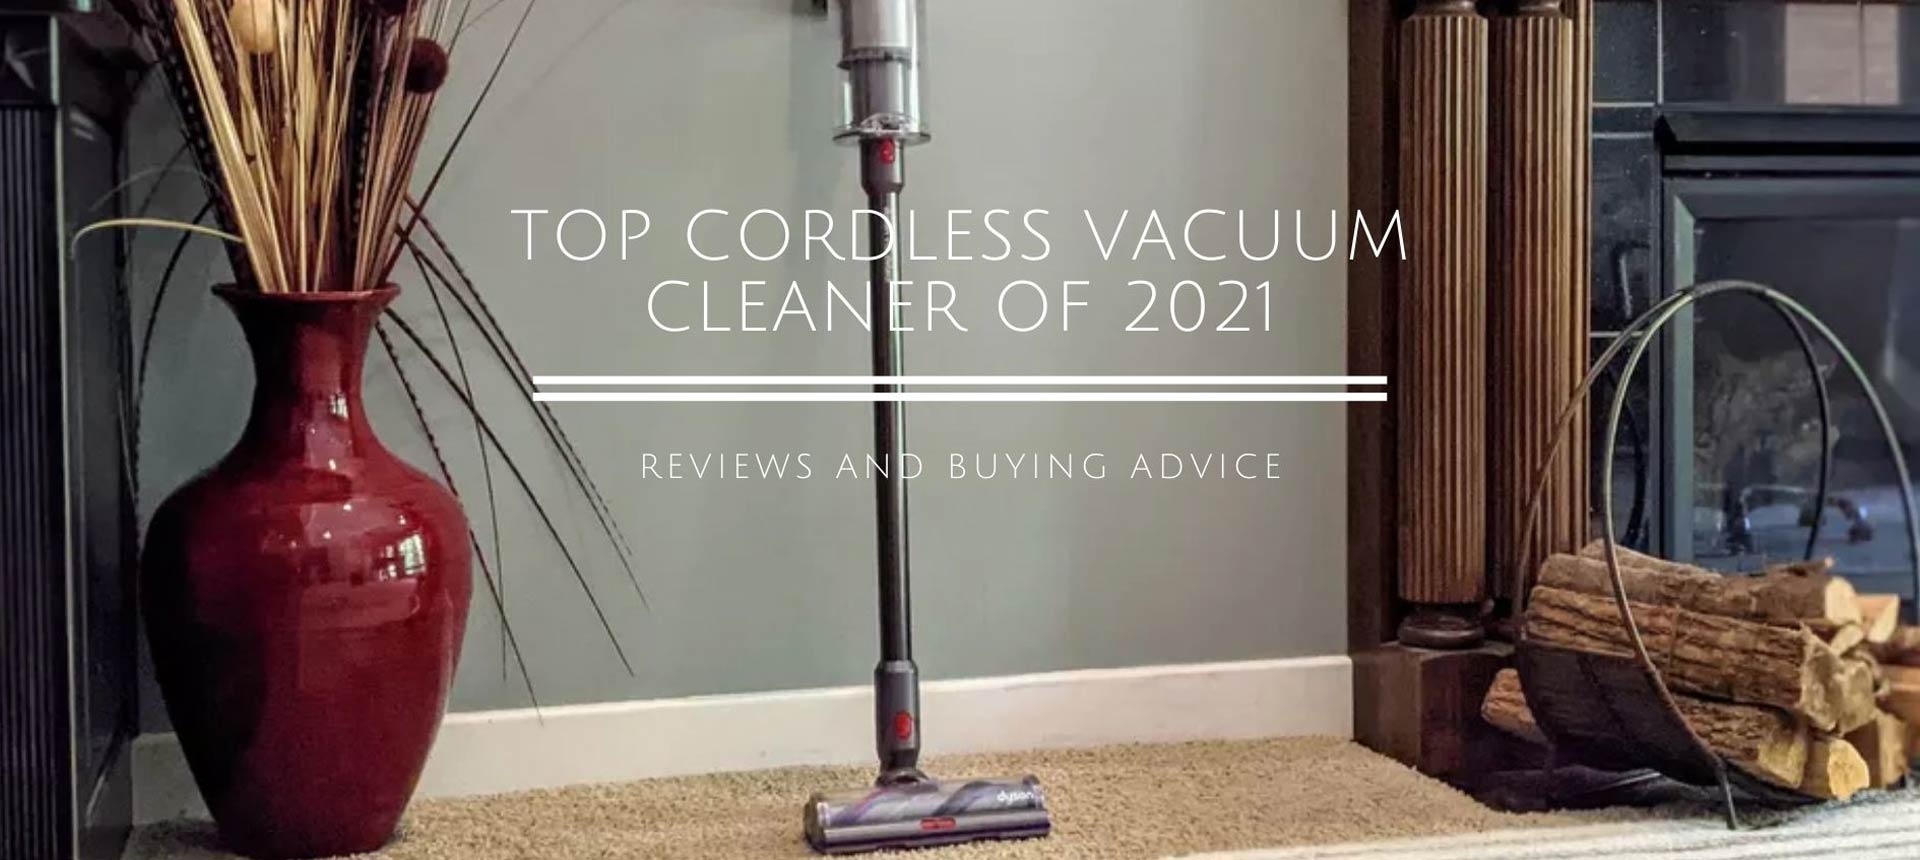 Top Cordless Vacuum Cleaner of 2021